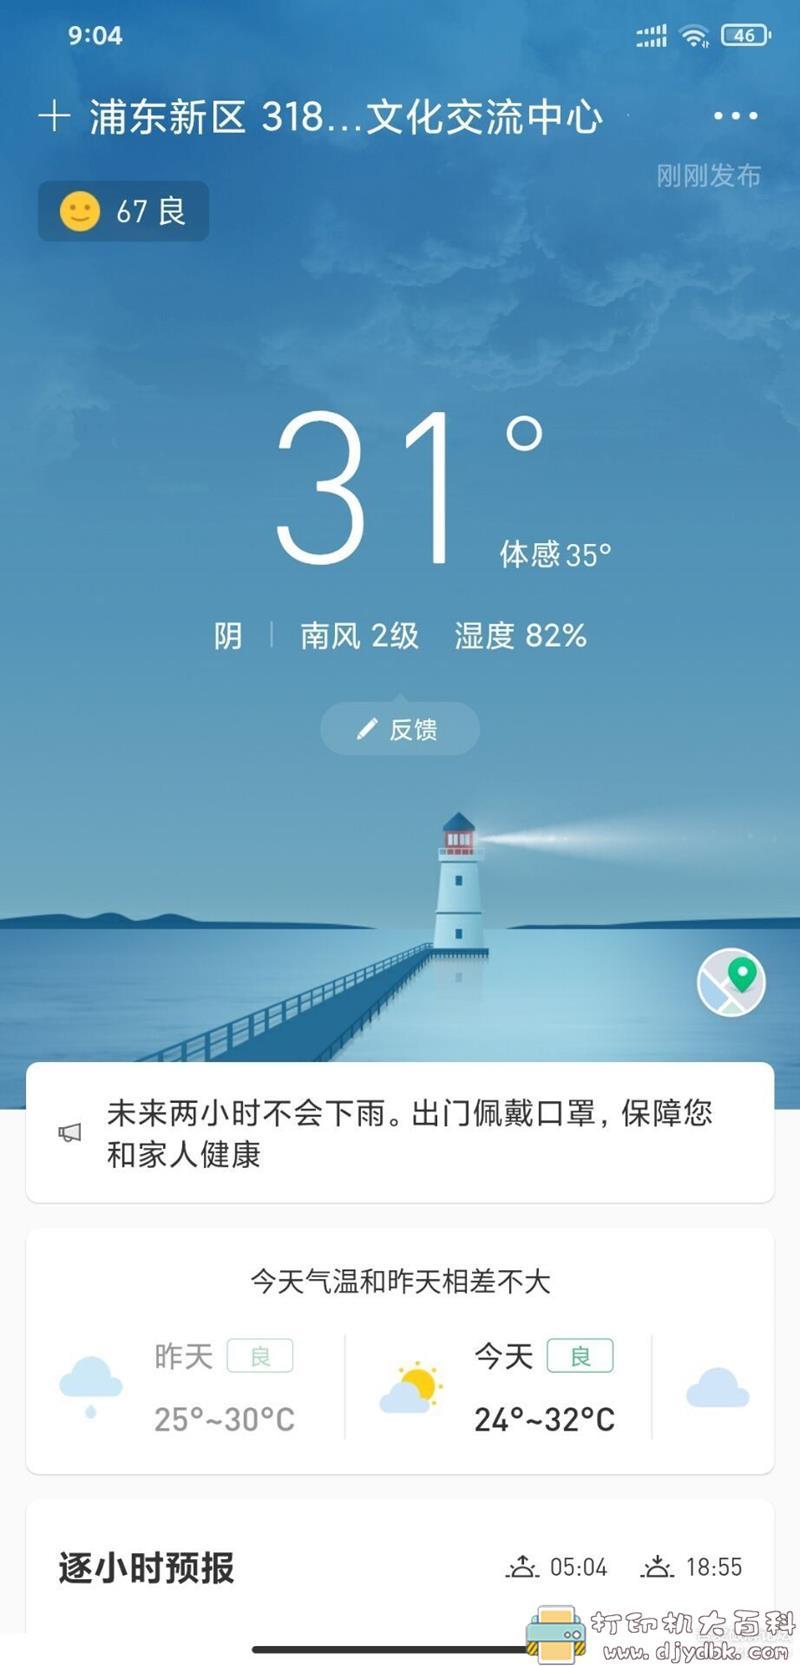 [Android]【彩云天气】v5.0.22 最新解锁会员去广告版 配图 No.1